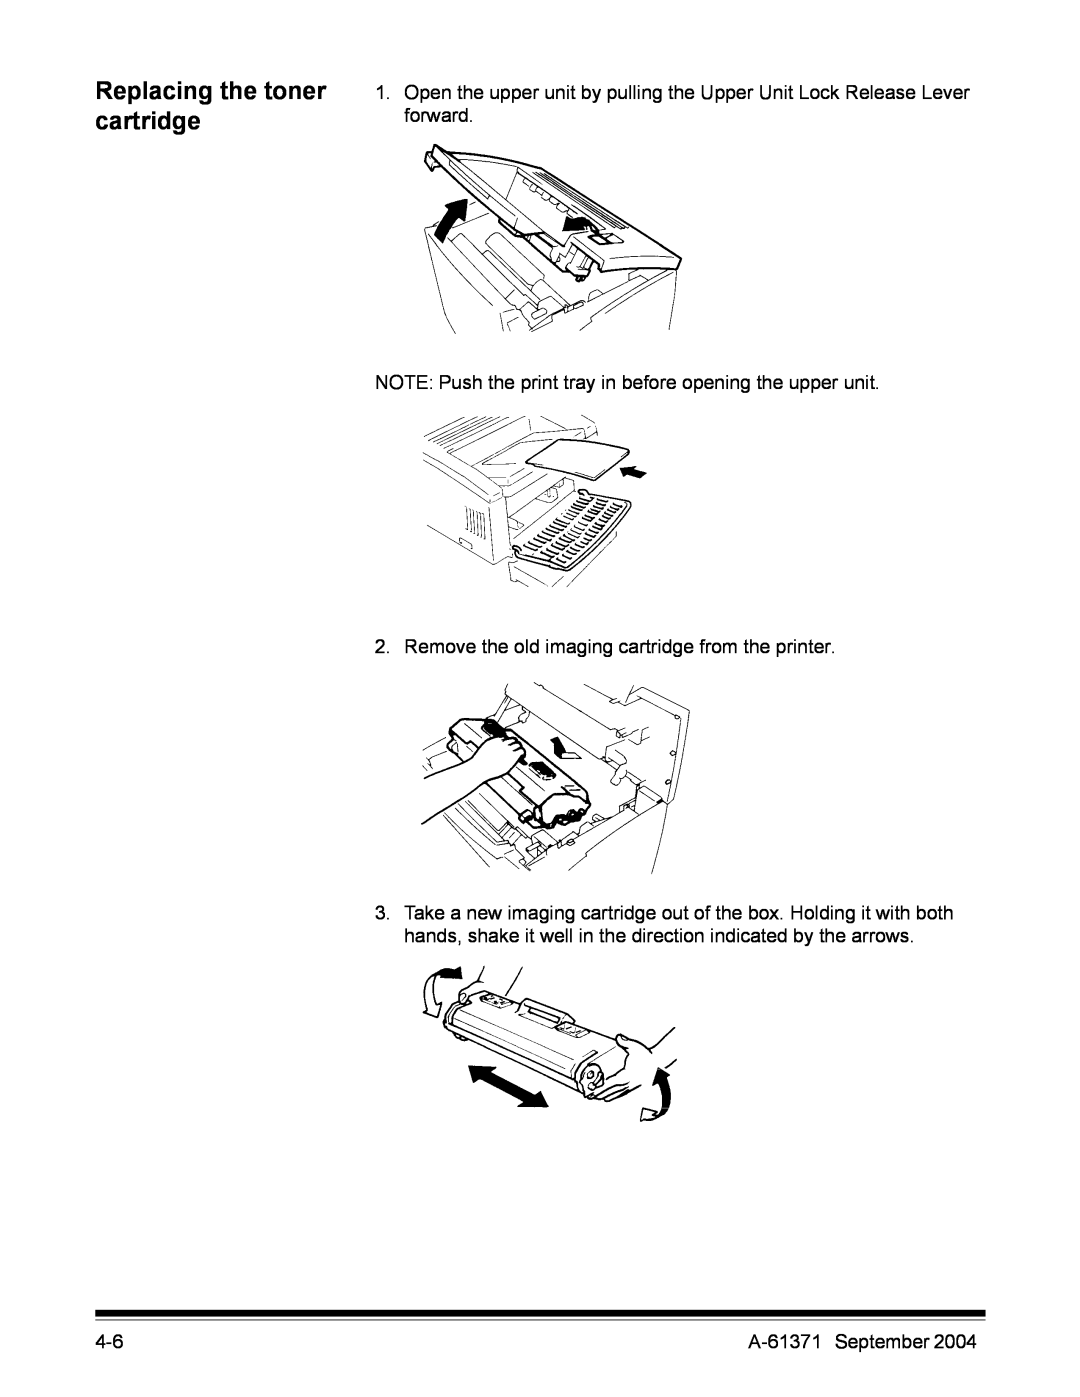 Kodak 3000DSV-E manual Replacing the toner cartridge, NOTE Push the print tray in before opening the upper unit 